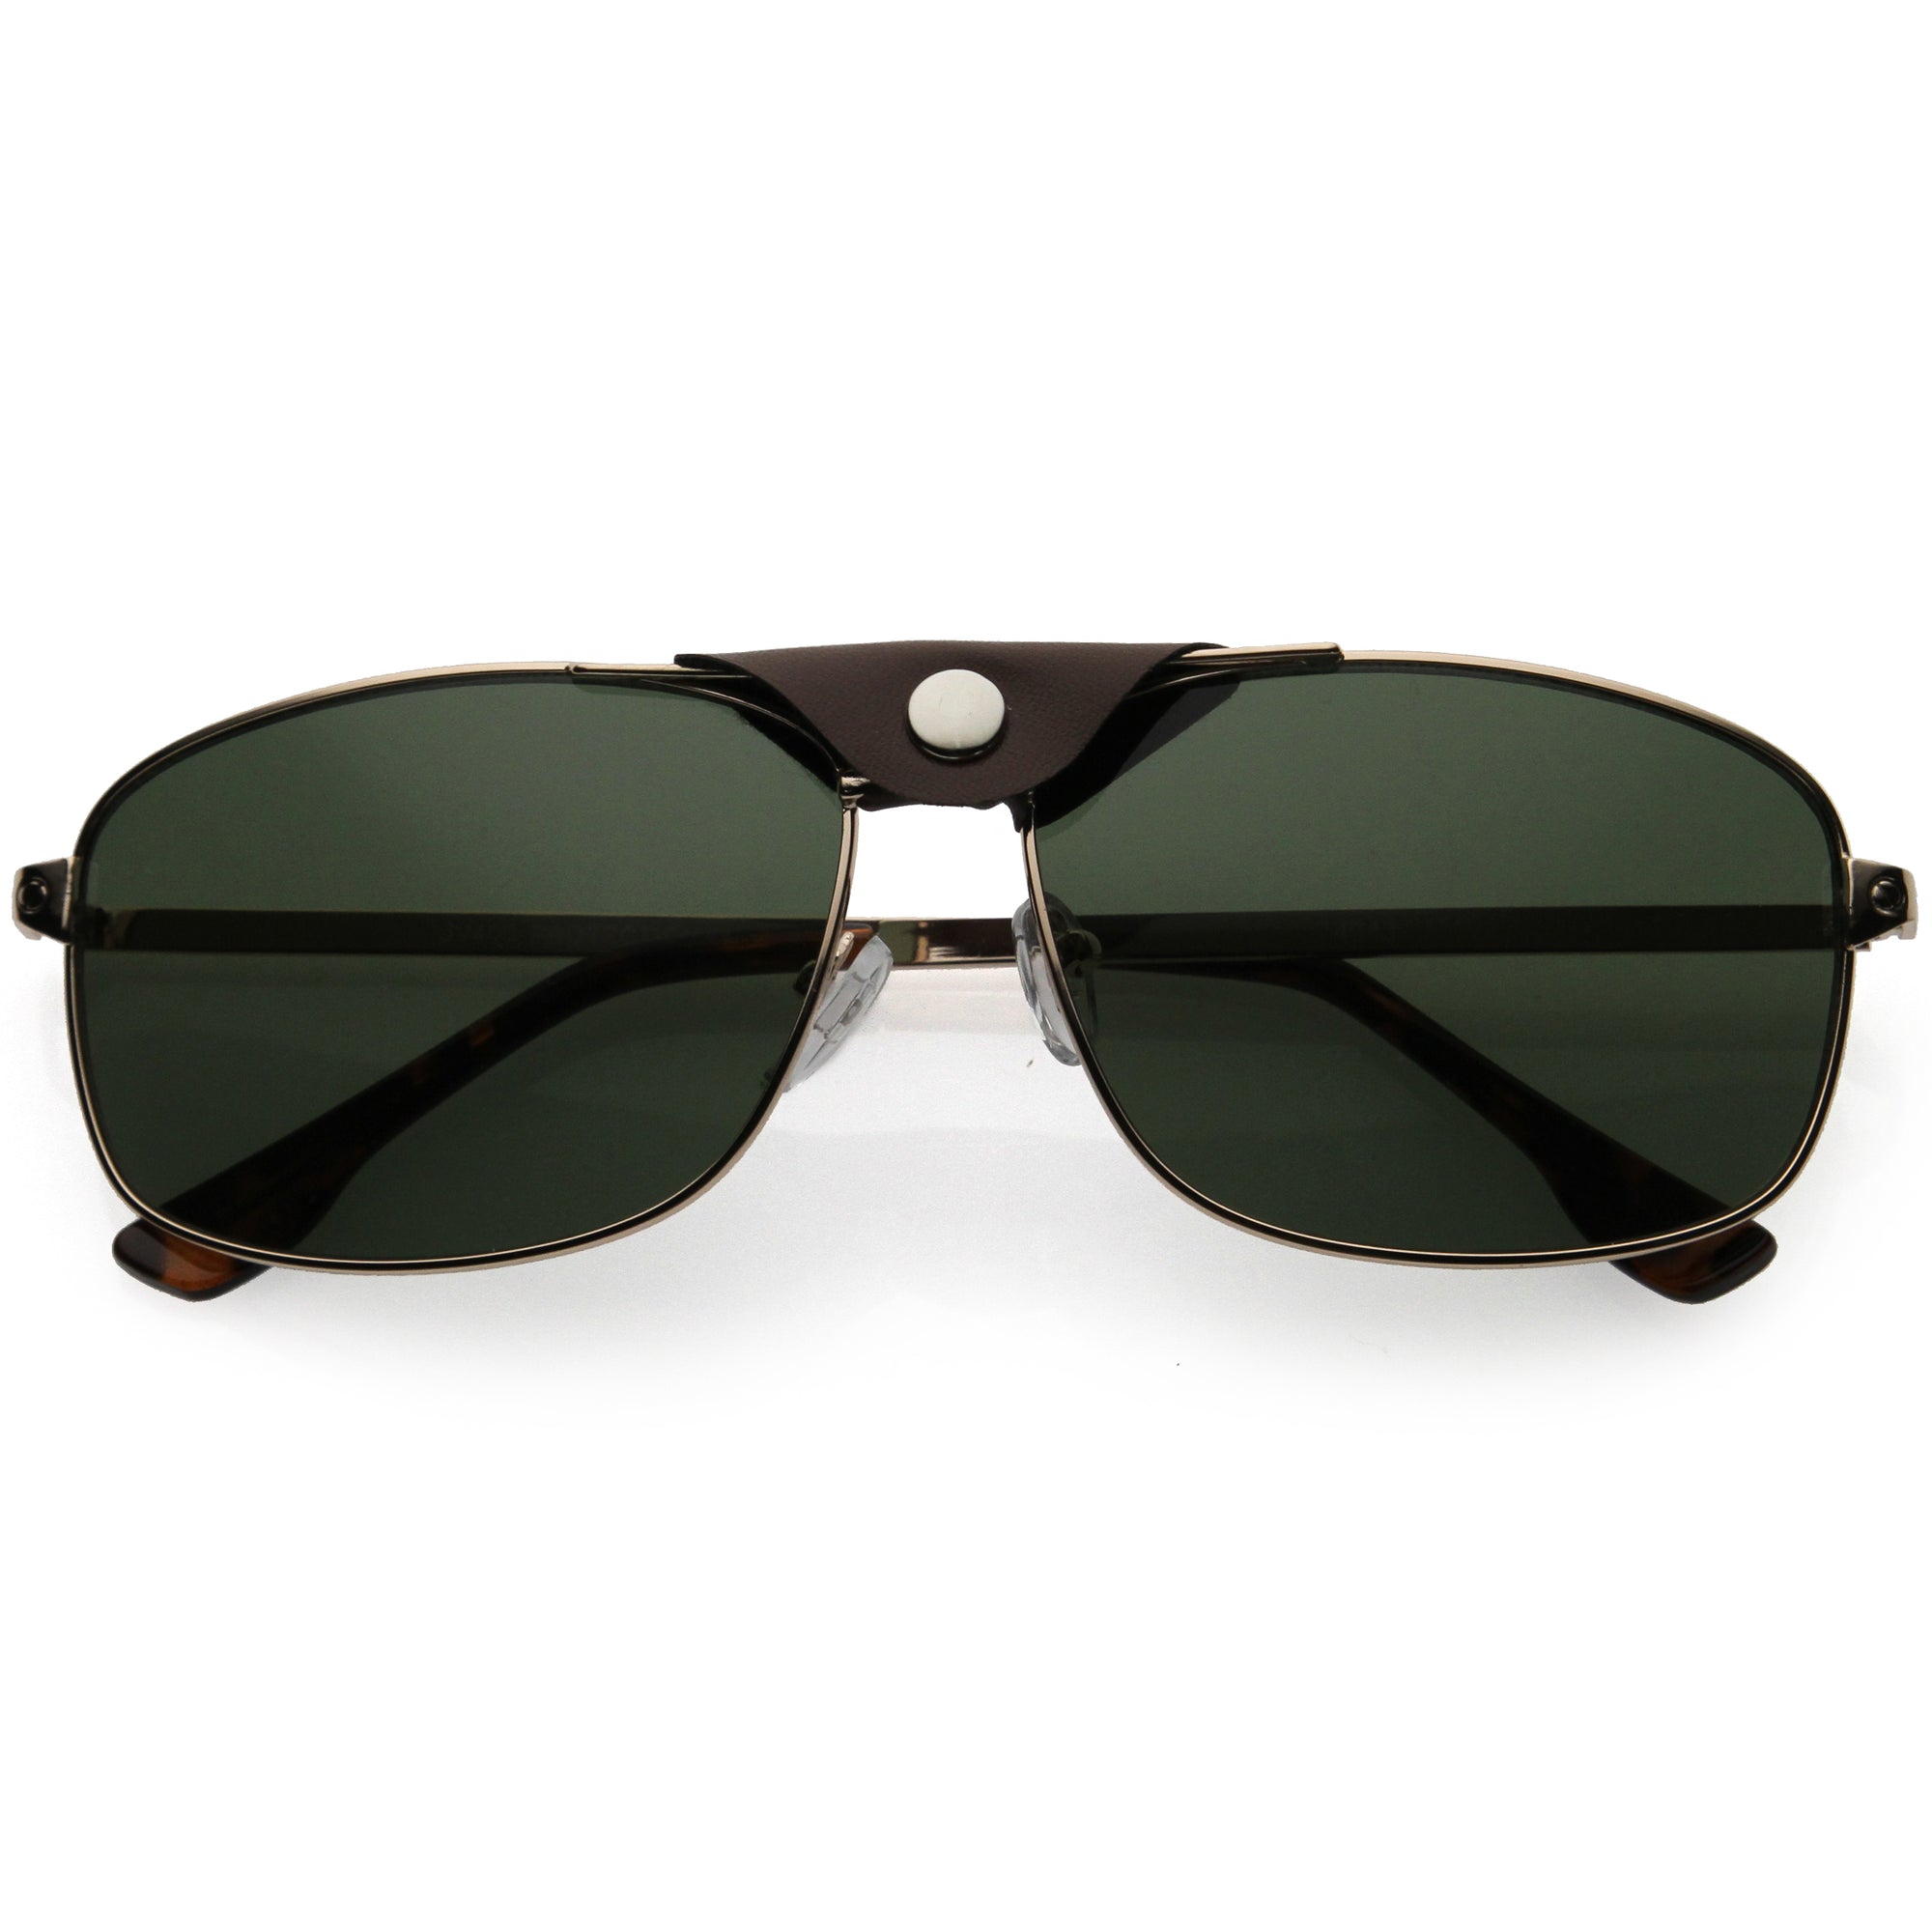 AV-1720 Modern Squared Aviators Wholesale Sunglasses - Frontier Fashion,  Inc.